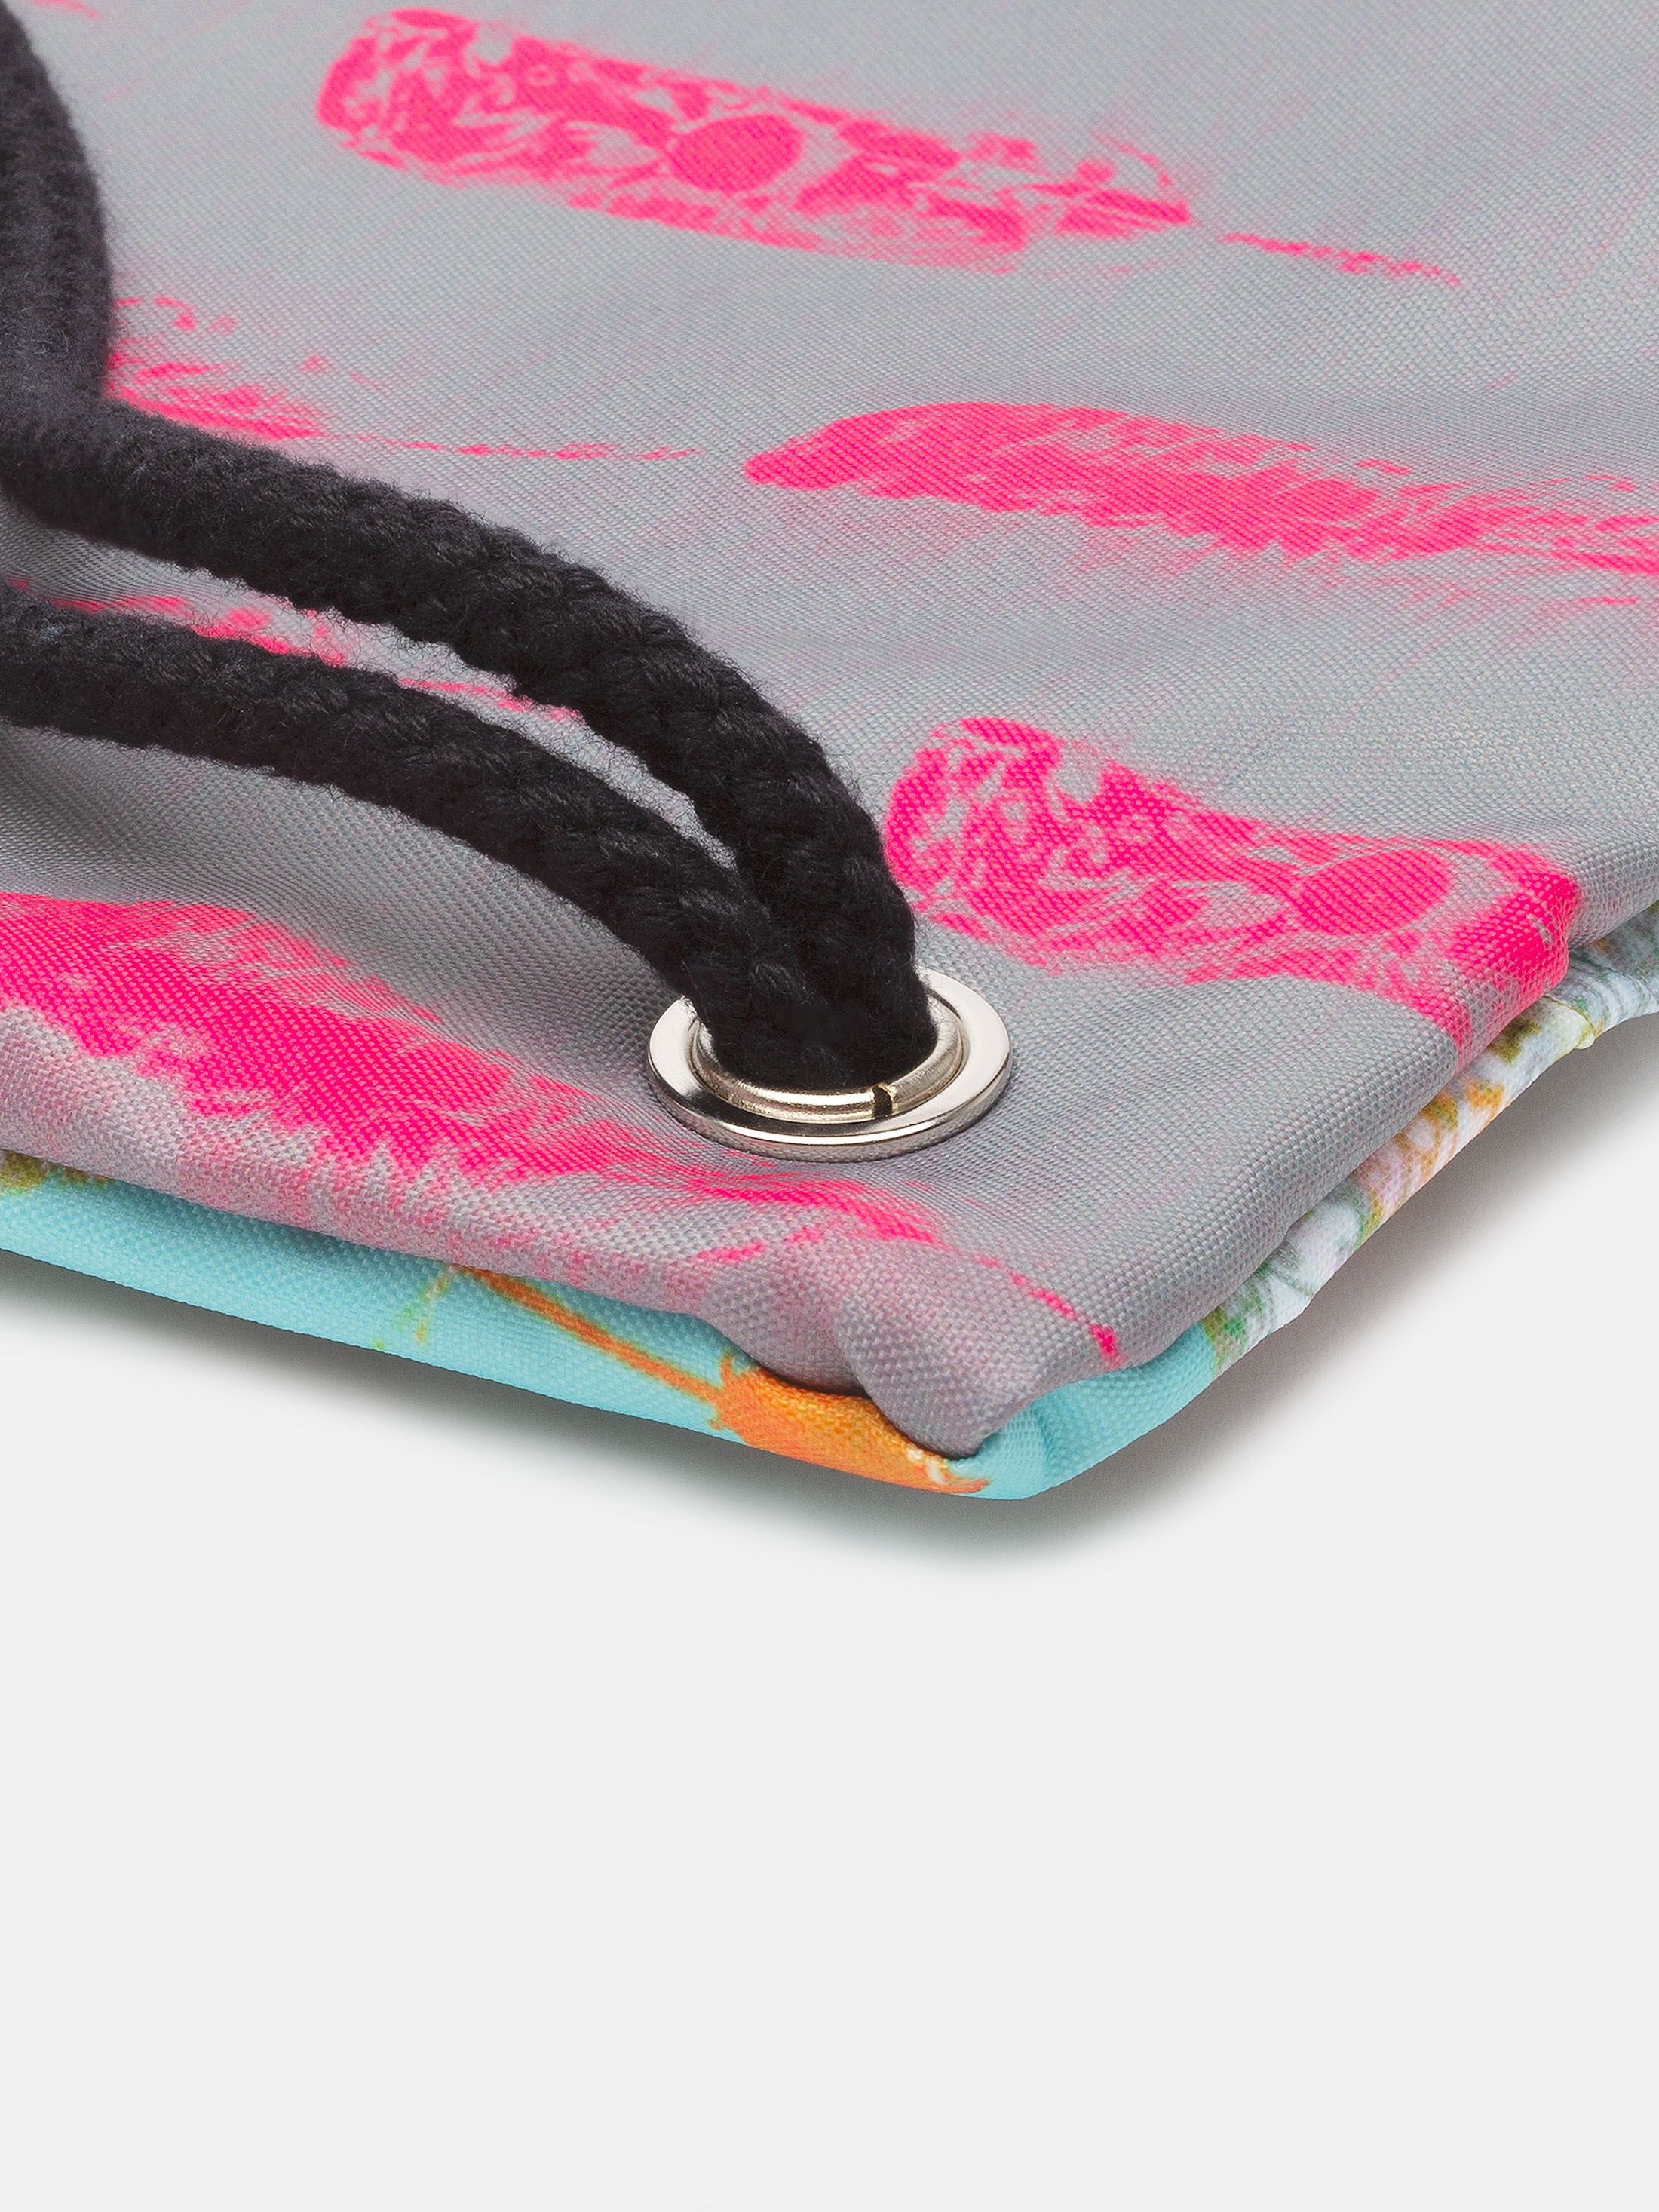 vintage pattern design printed onto custom cinch sacks